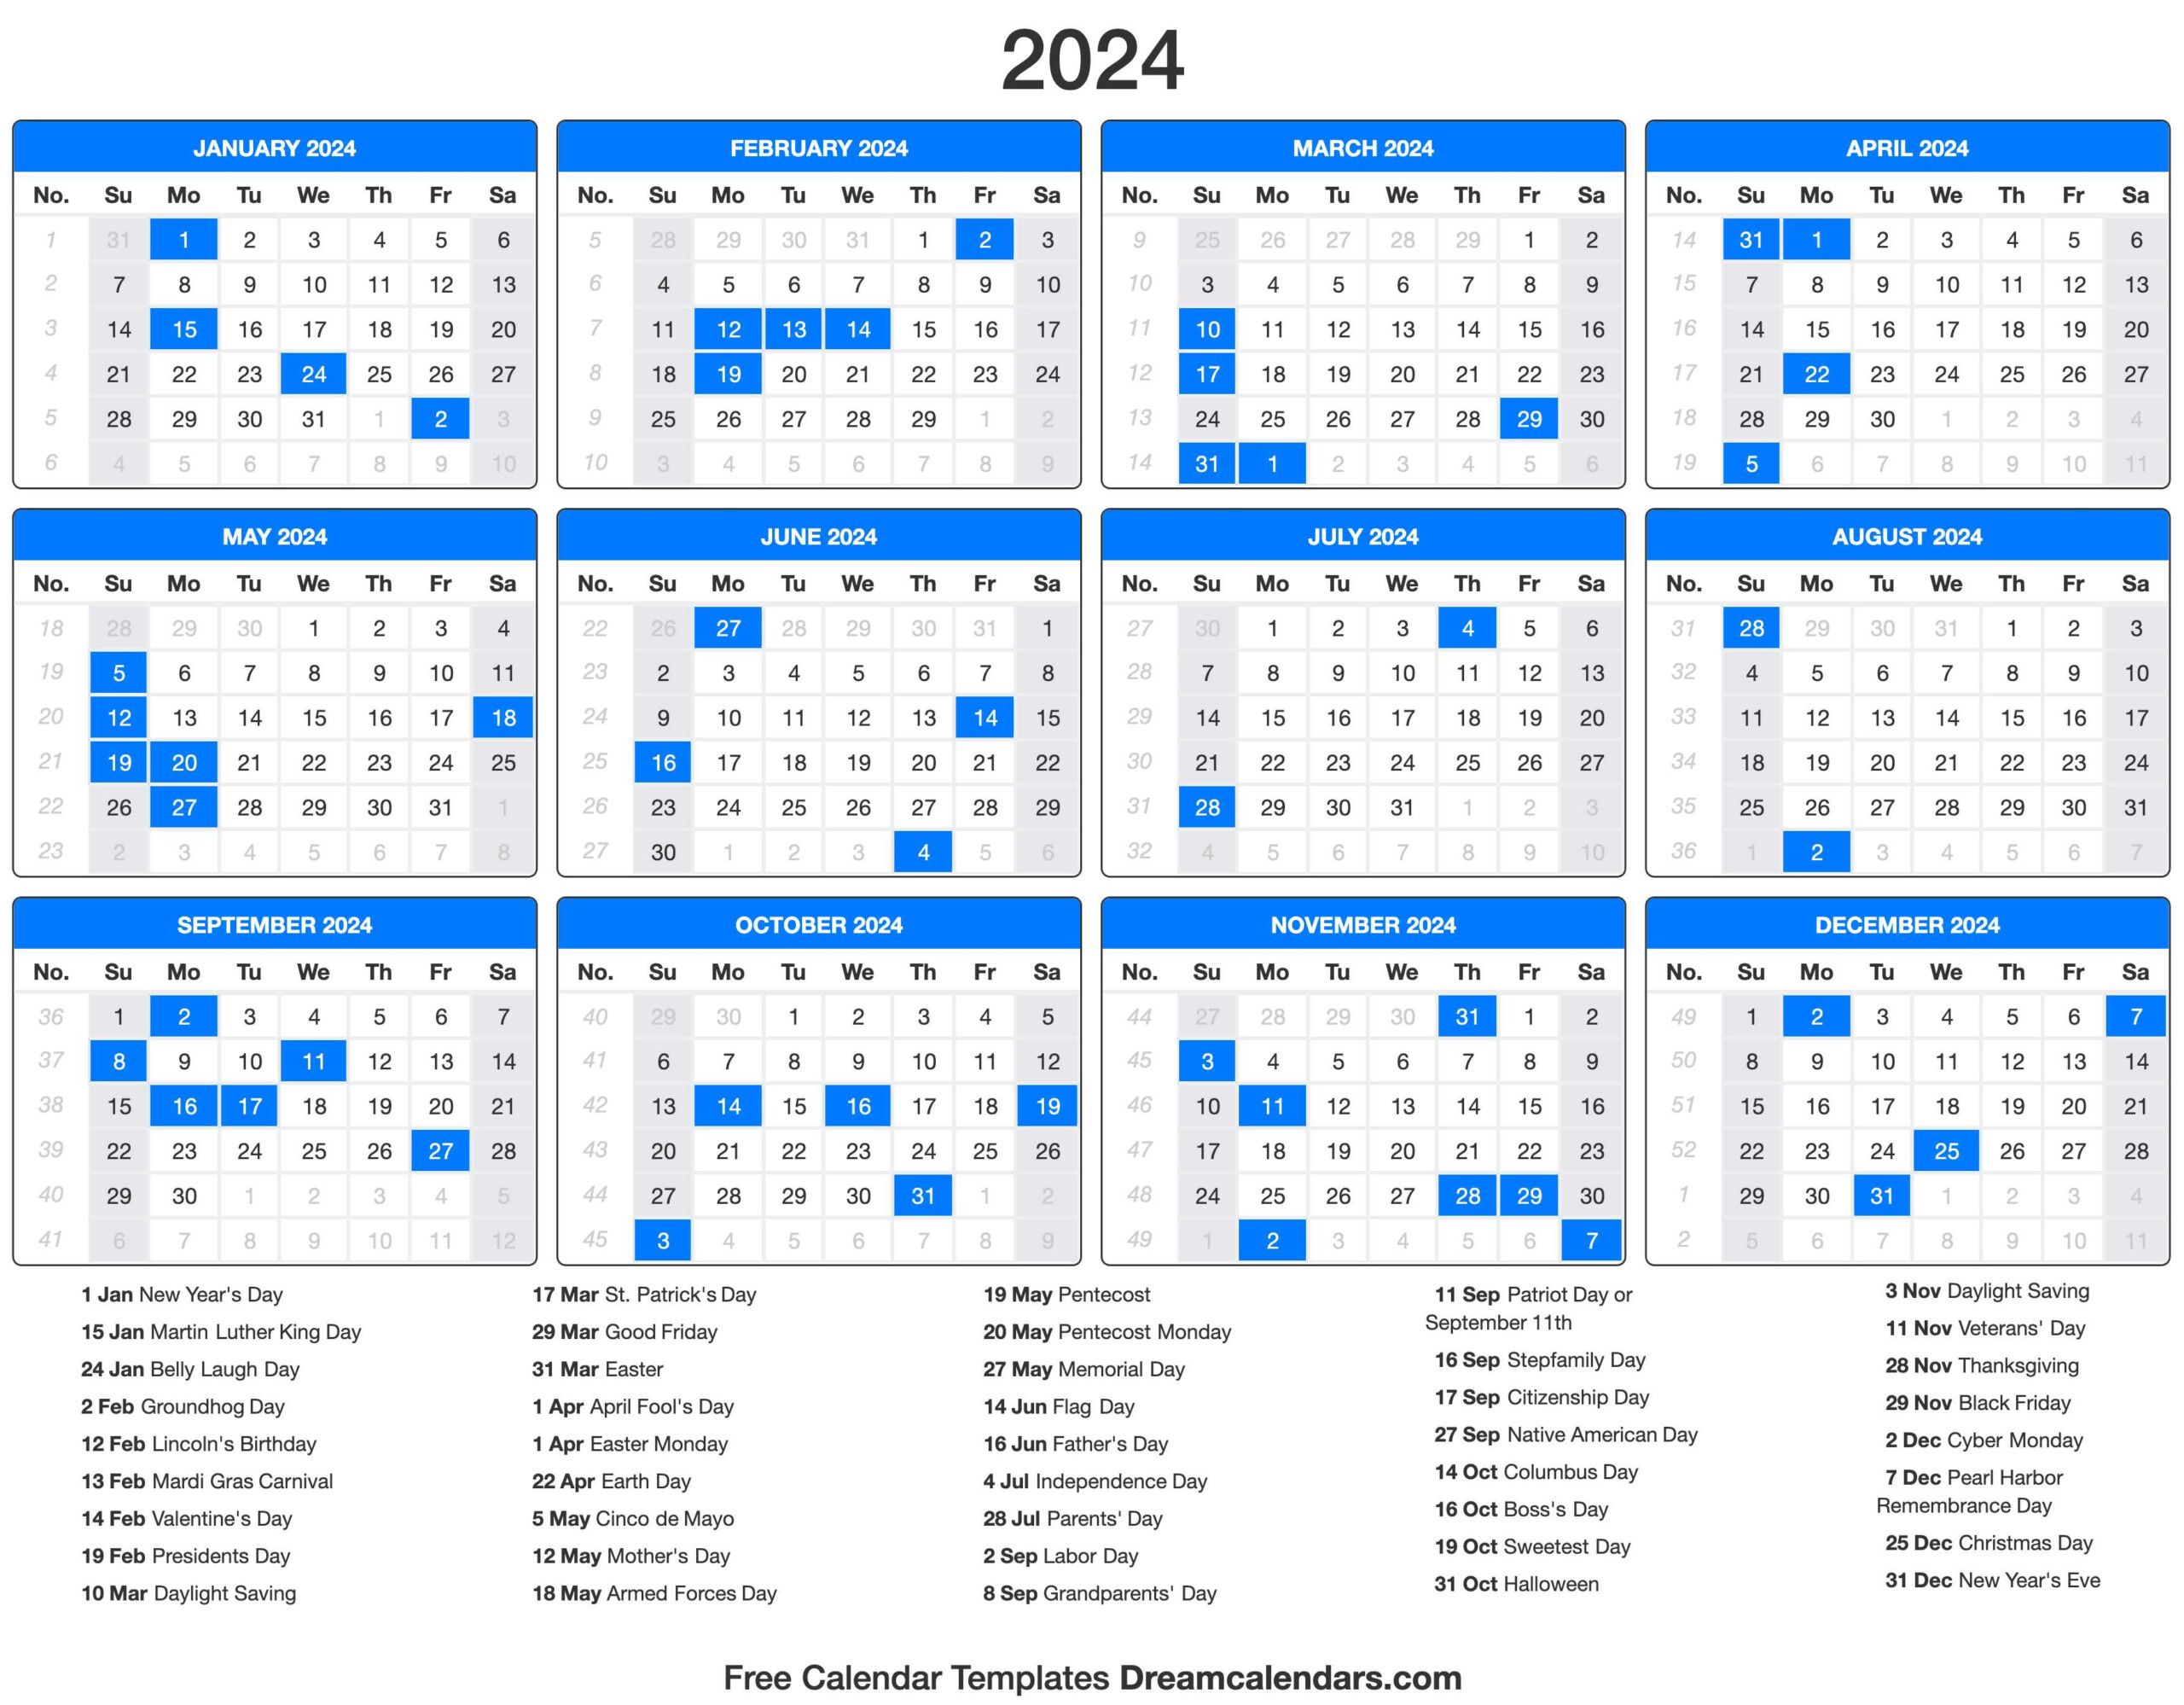 Thanksgiving 2024 Calendar Date And Time Bonita Marketa